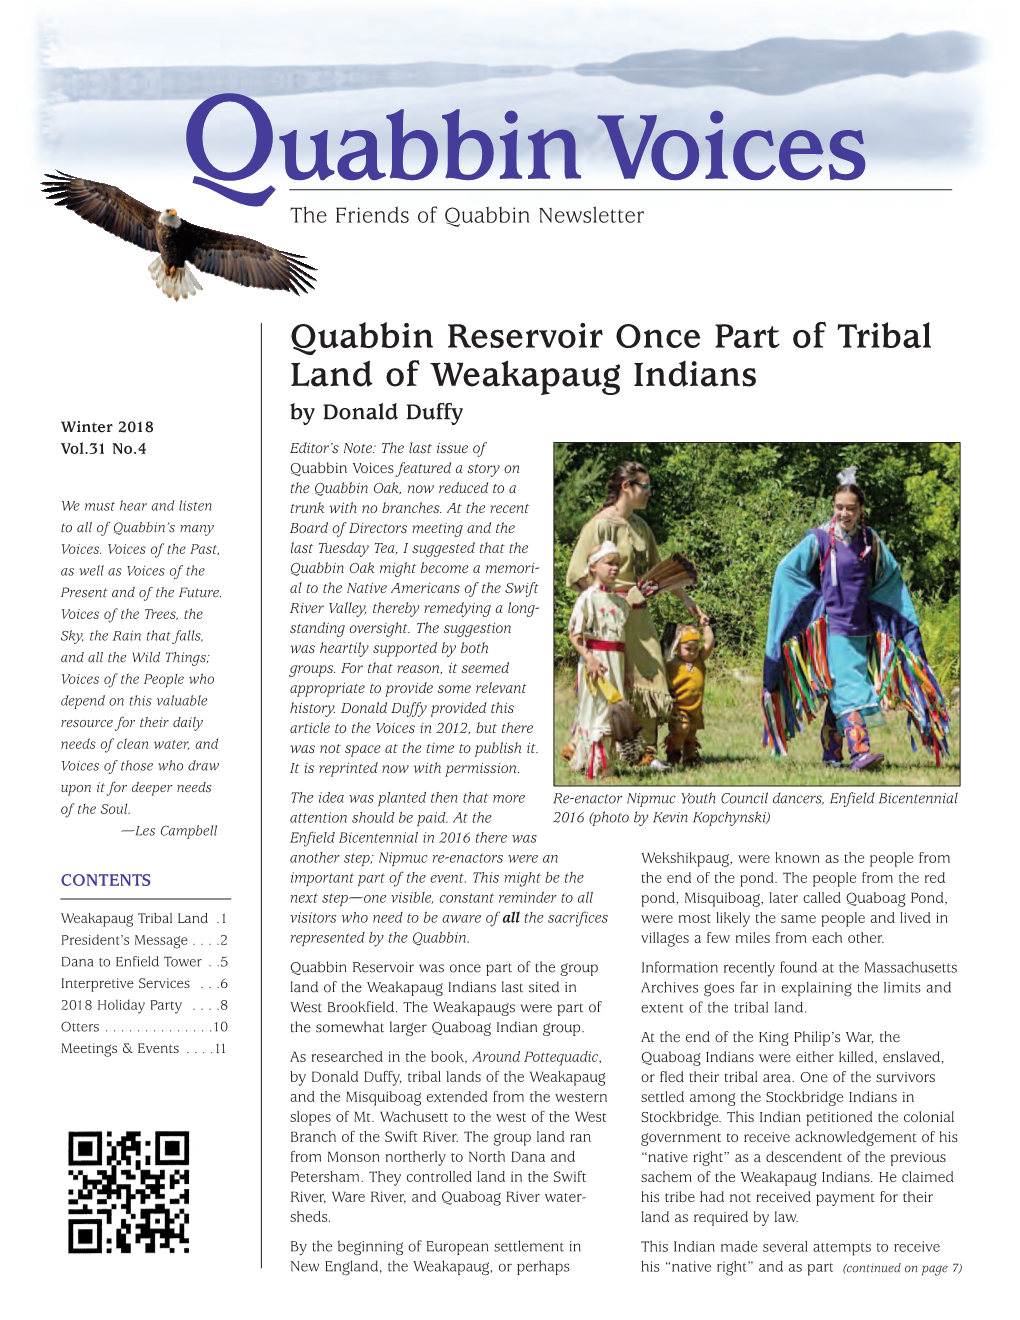 Winter 2018 Quabbin Voices Newsletter